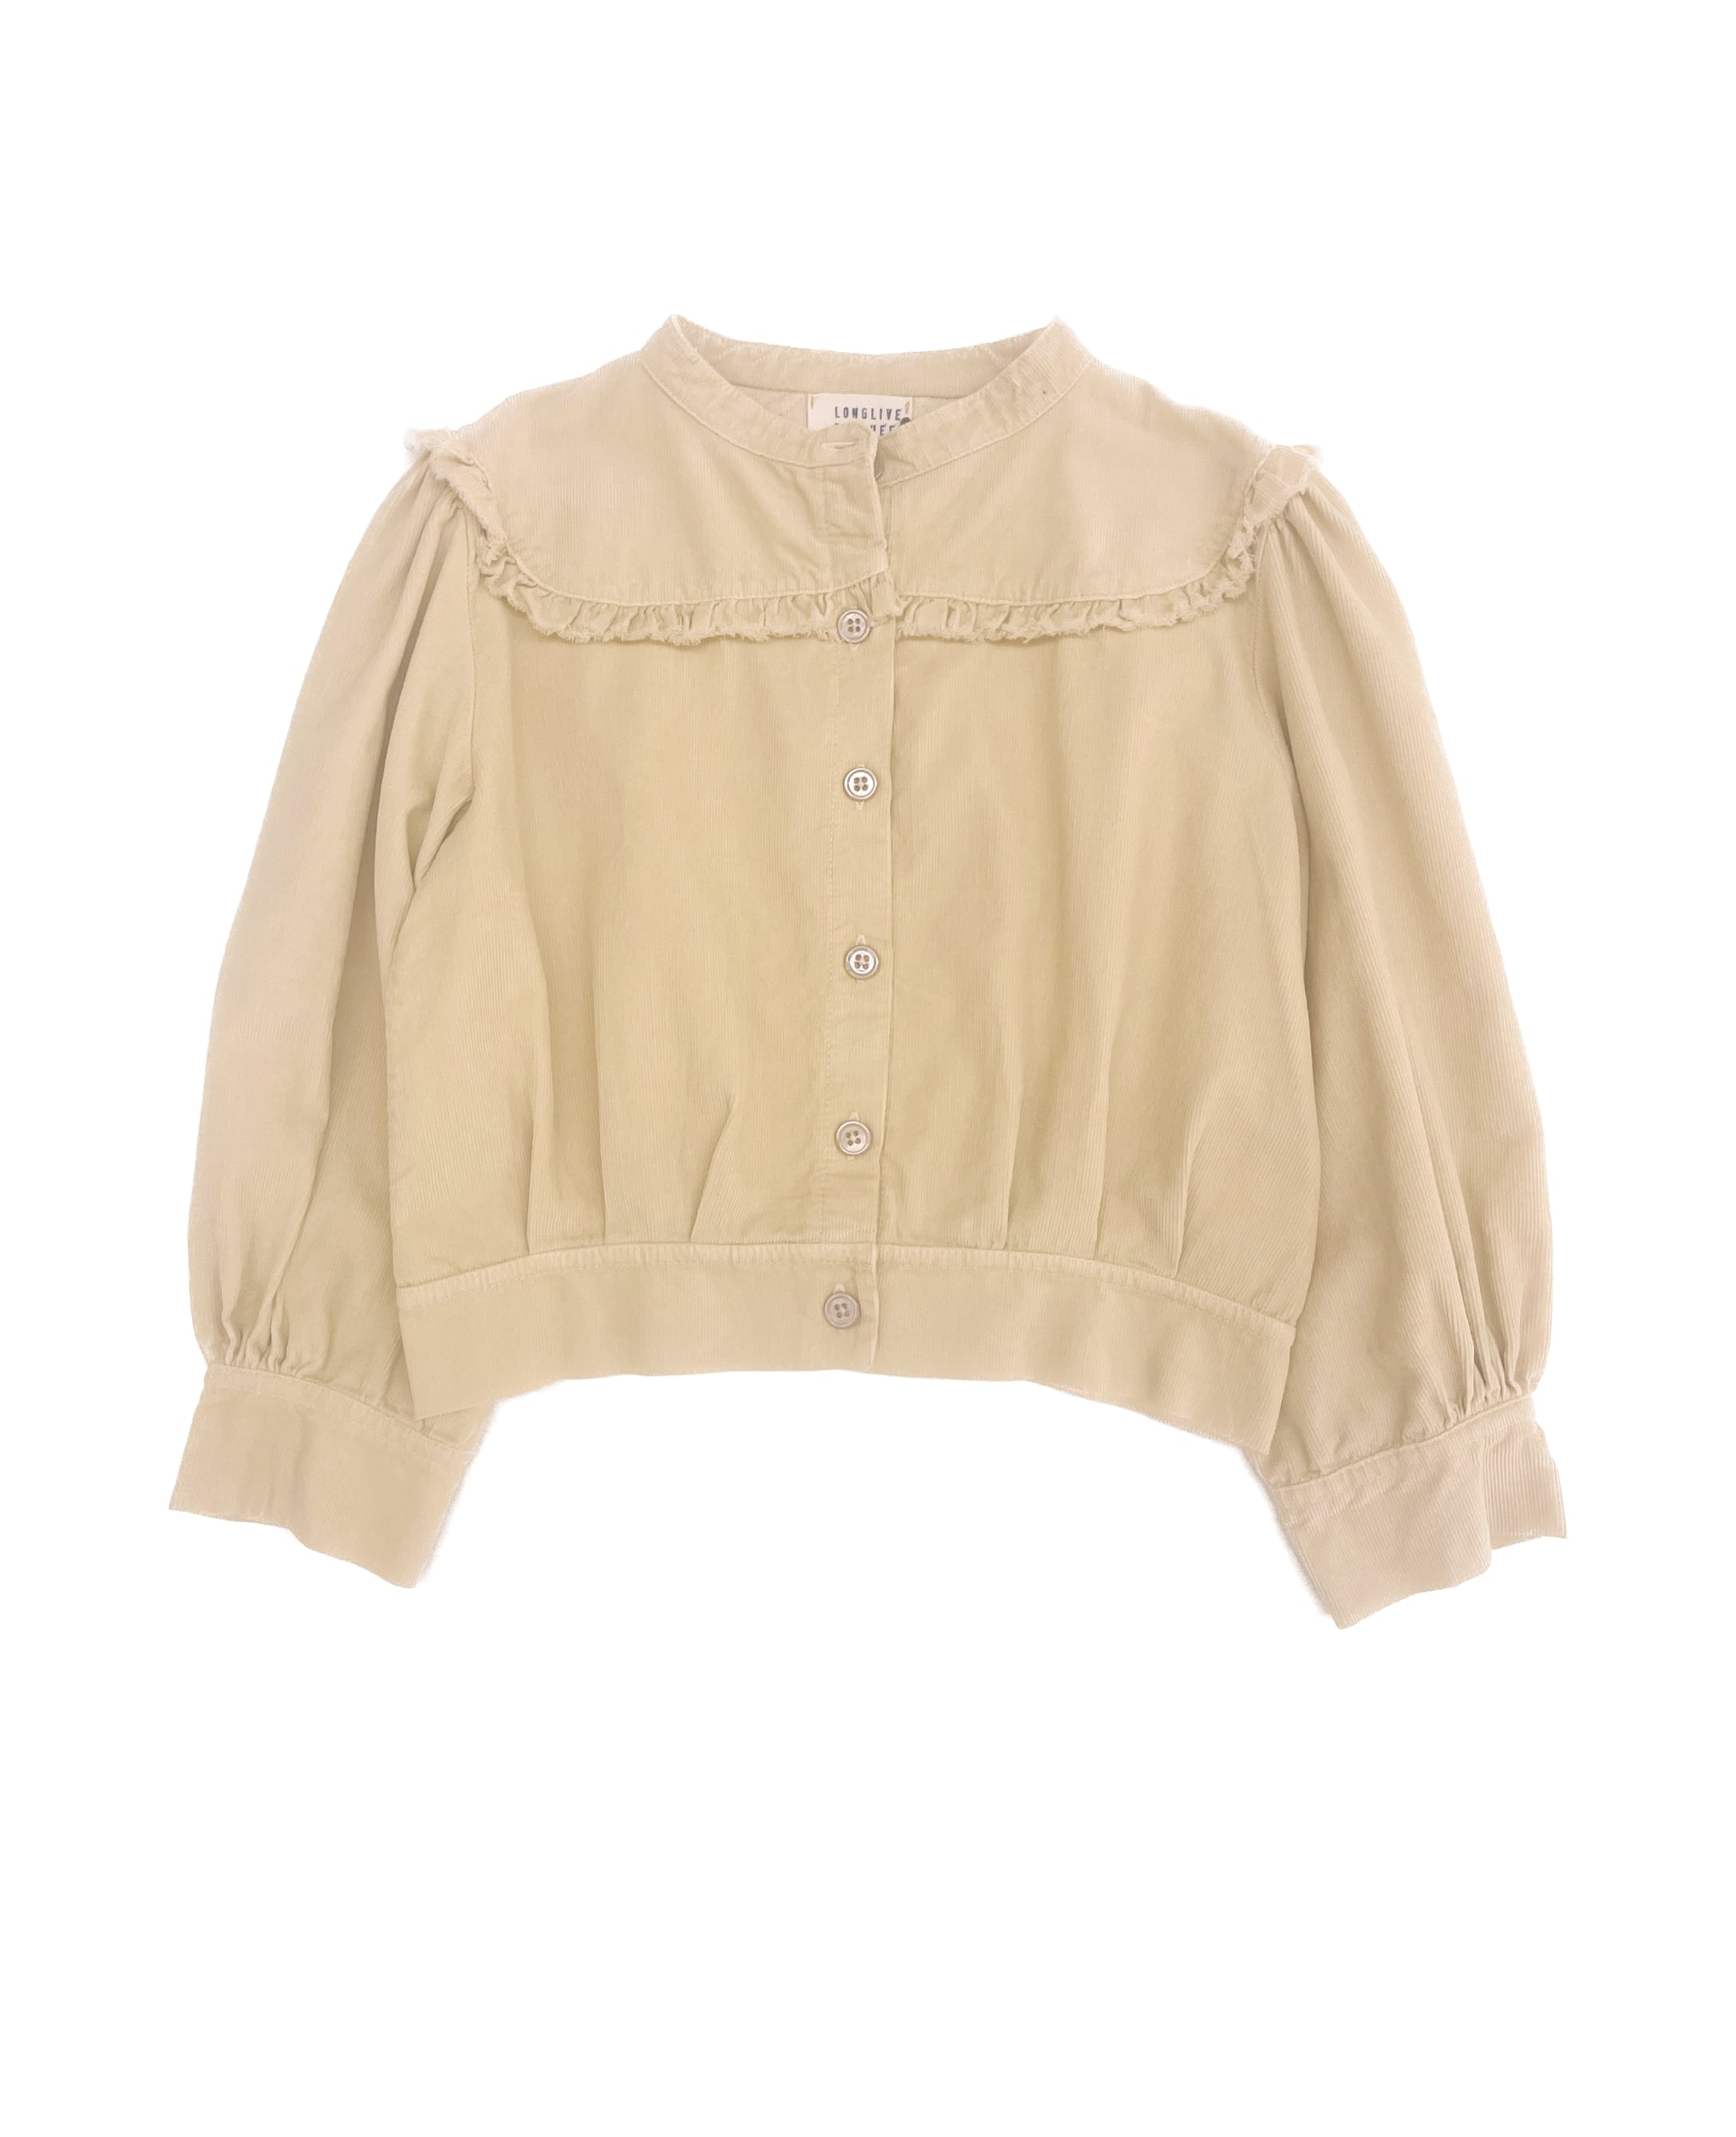 LONG LIVE THE QUEEN / ribvelvet blouse jacket / vanilla